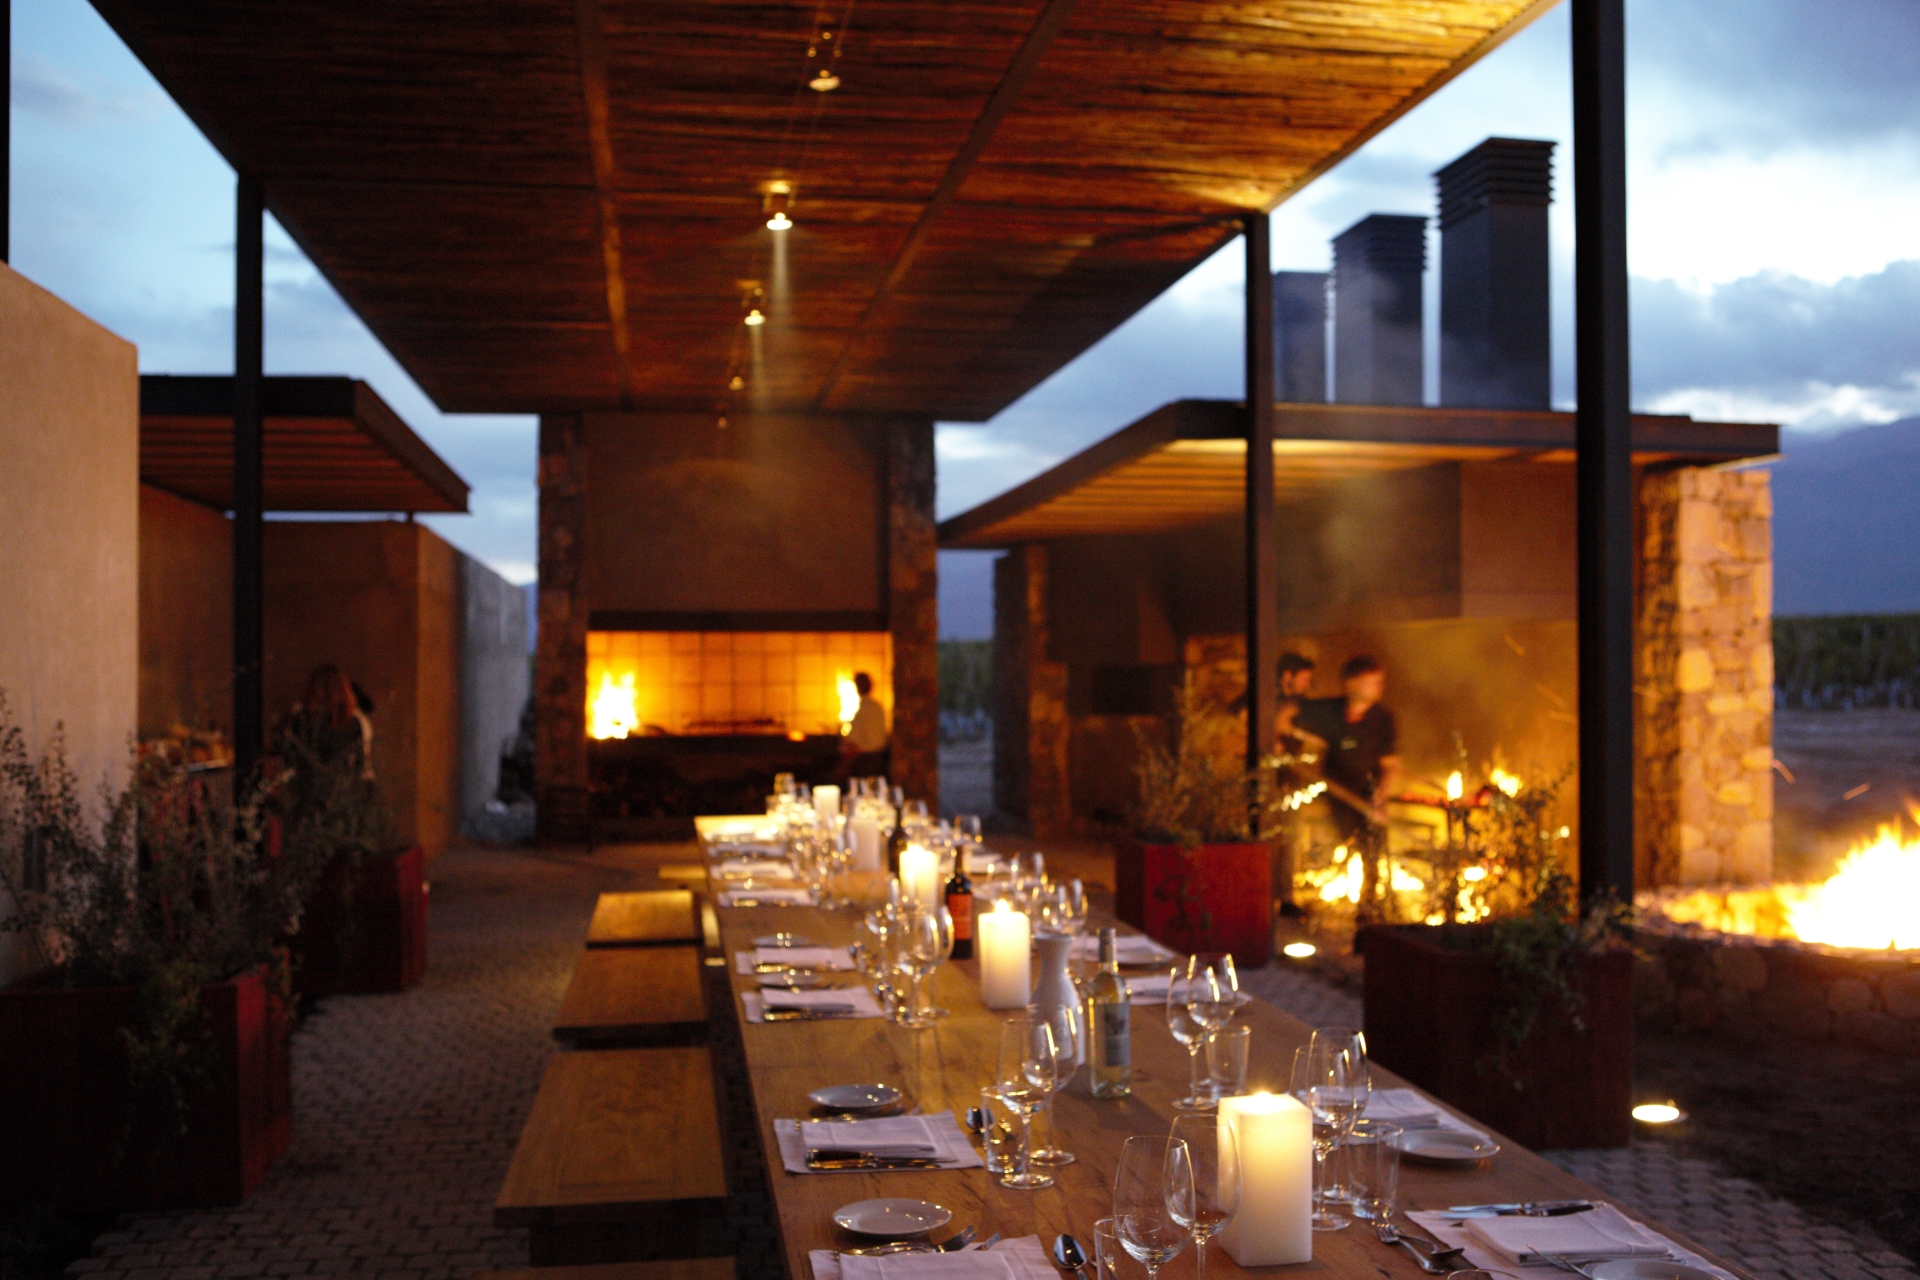 Al fresco dining - The Vines Resort & Spa